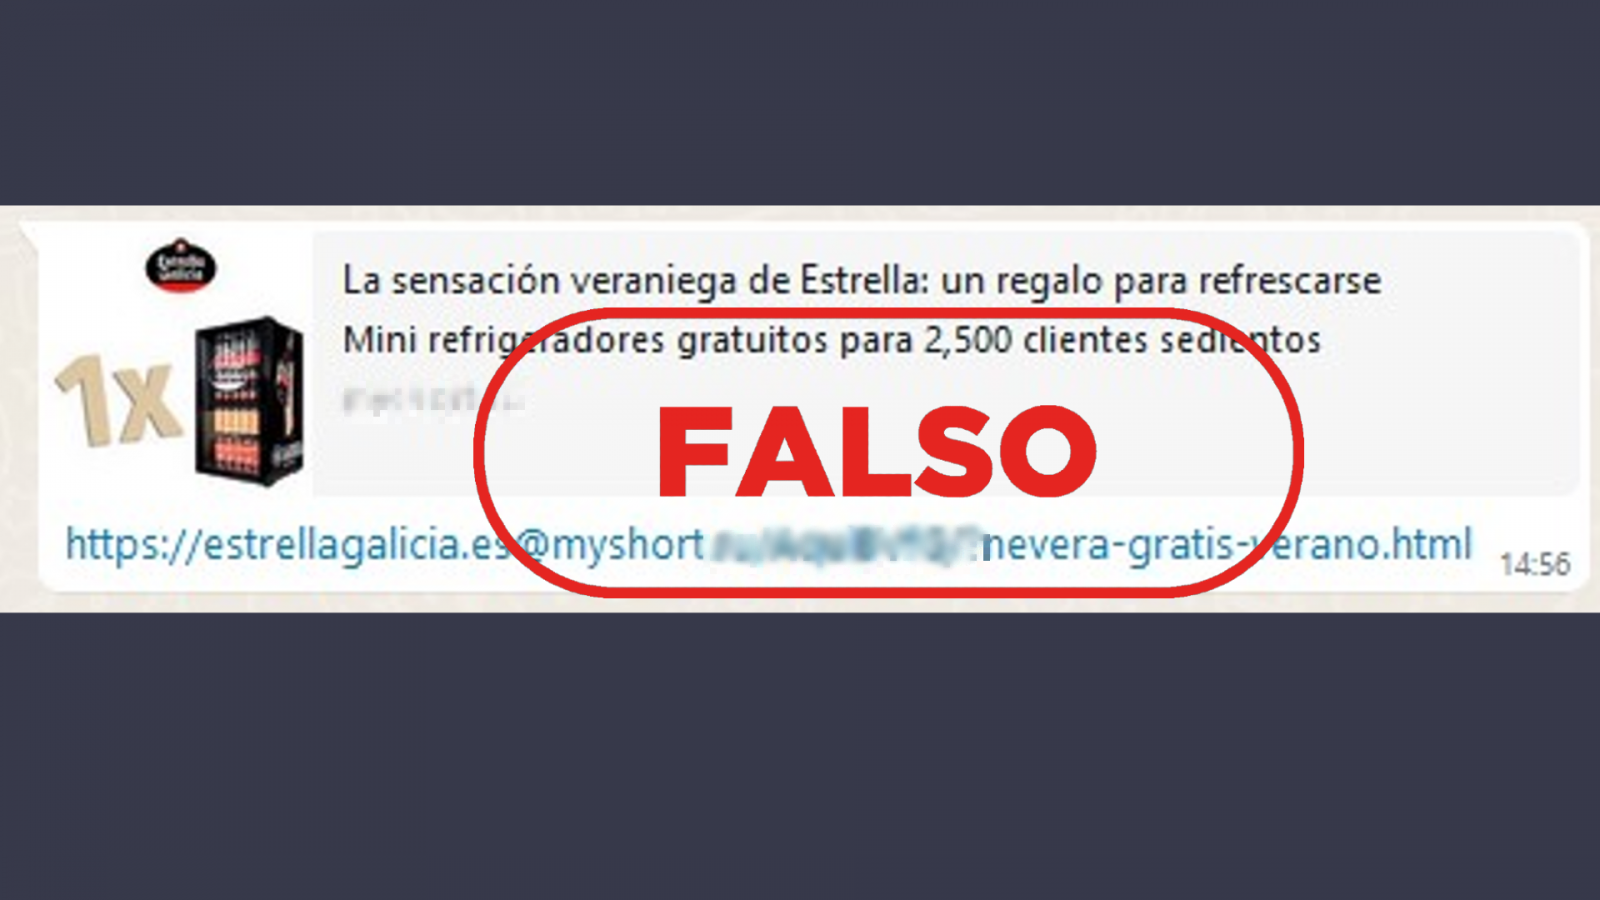 Mensaje fraudulento que suplanta a Estrella Galicia para ofrecer un falso sorteo de mini neveras con cerveza, con el sello falso de VerificaRTVE en rojo